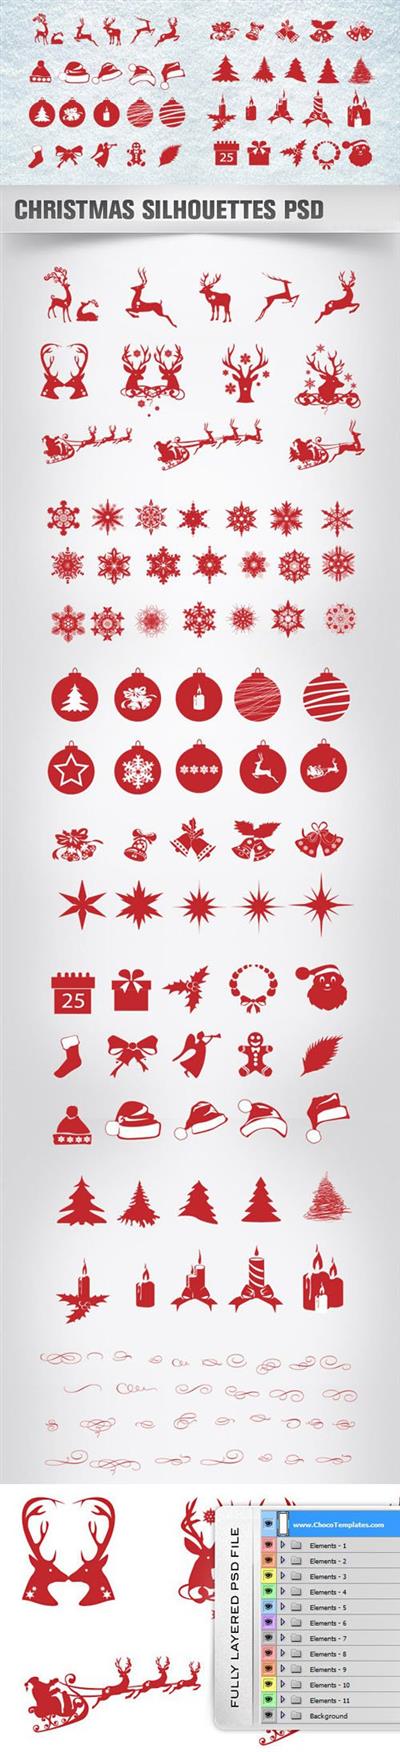 108 Christmas Silhouettes PSD Templates